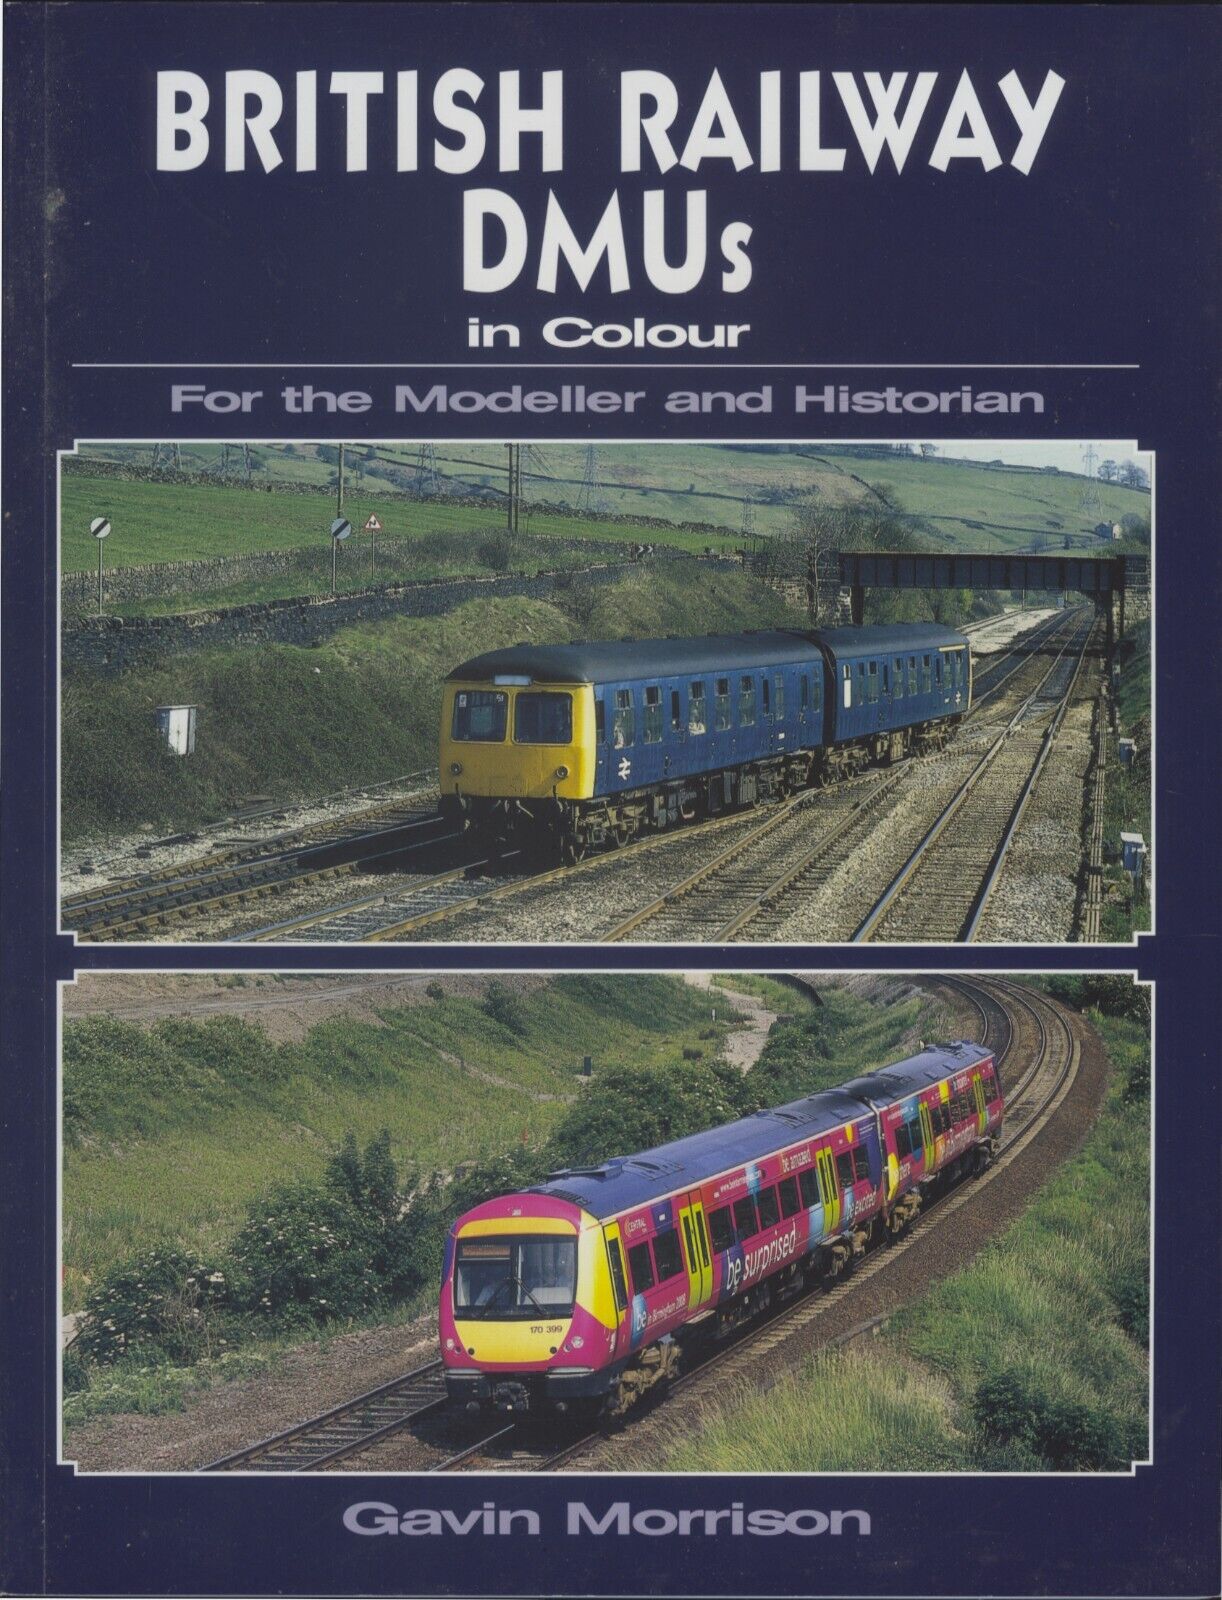 BRITISH RAILWAY DMU's COLOUR by MORRISON VG+ For Modeller & Historian